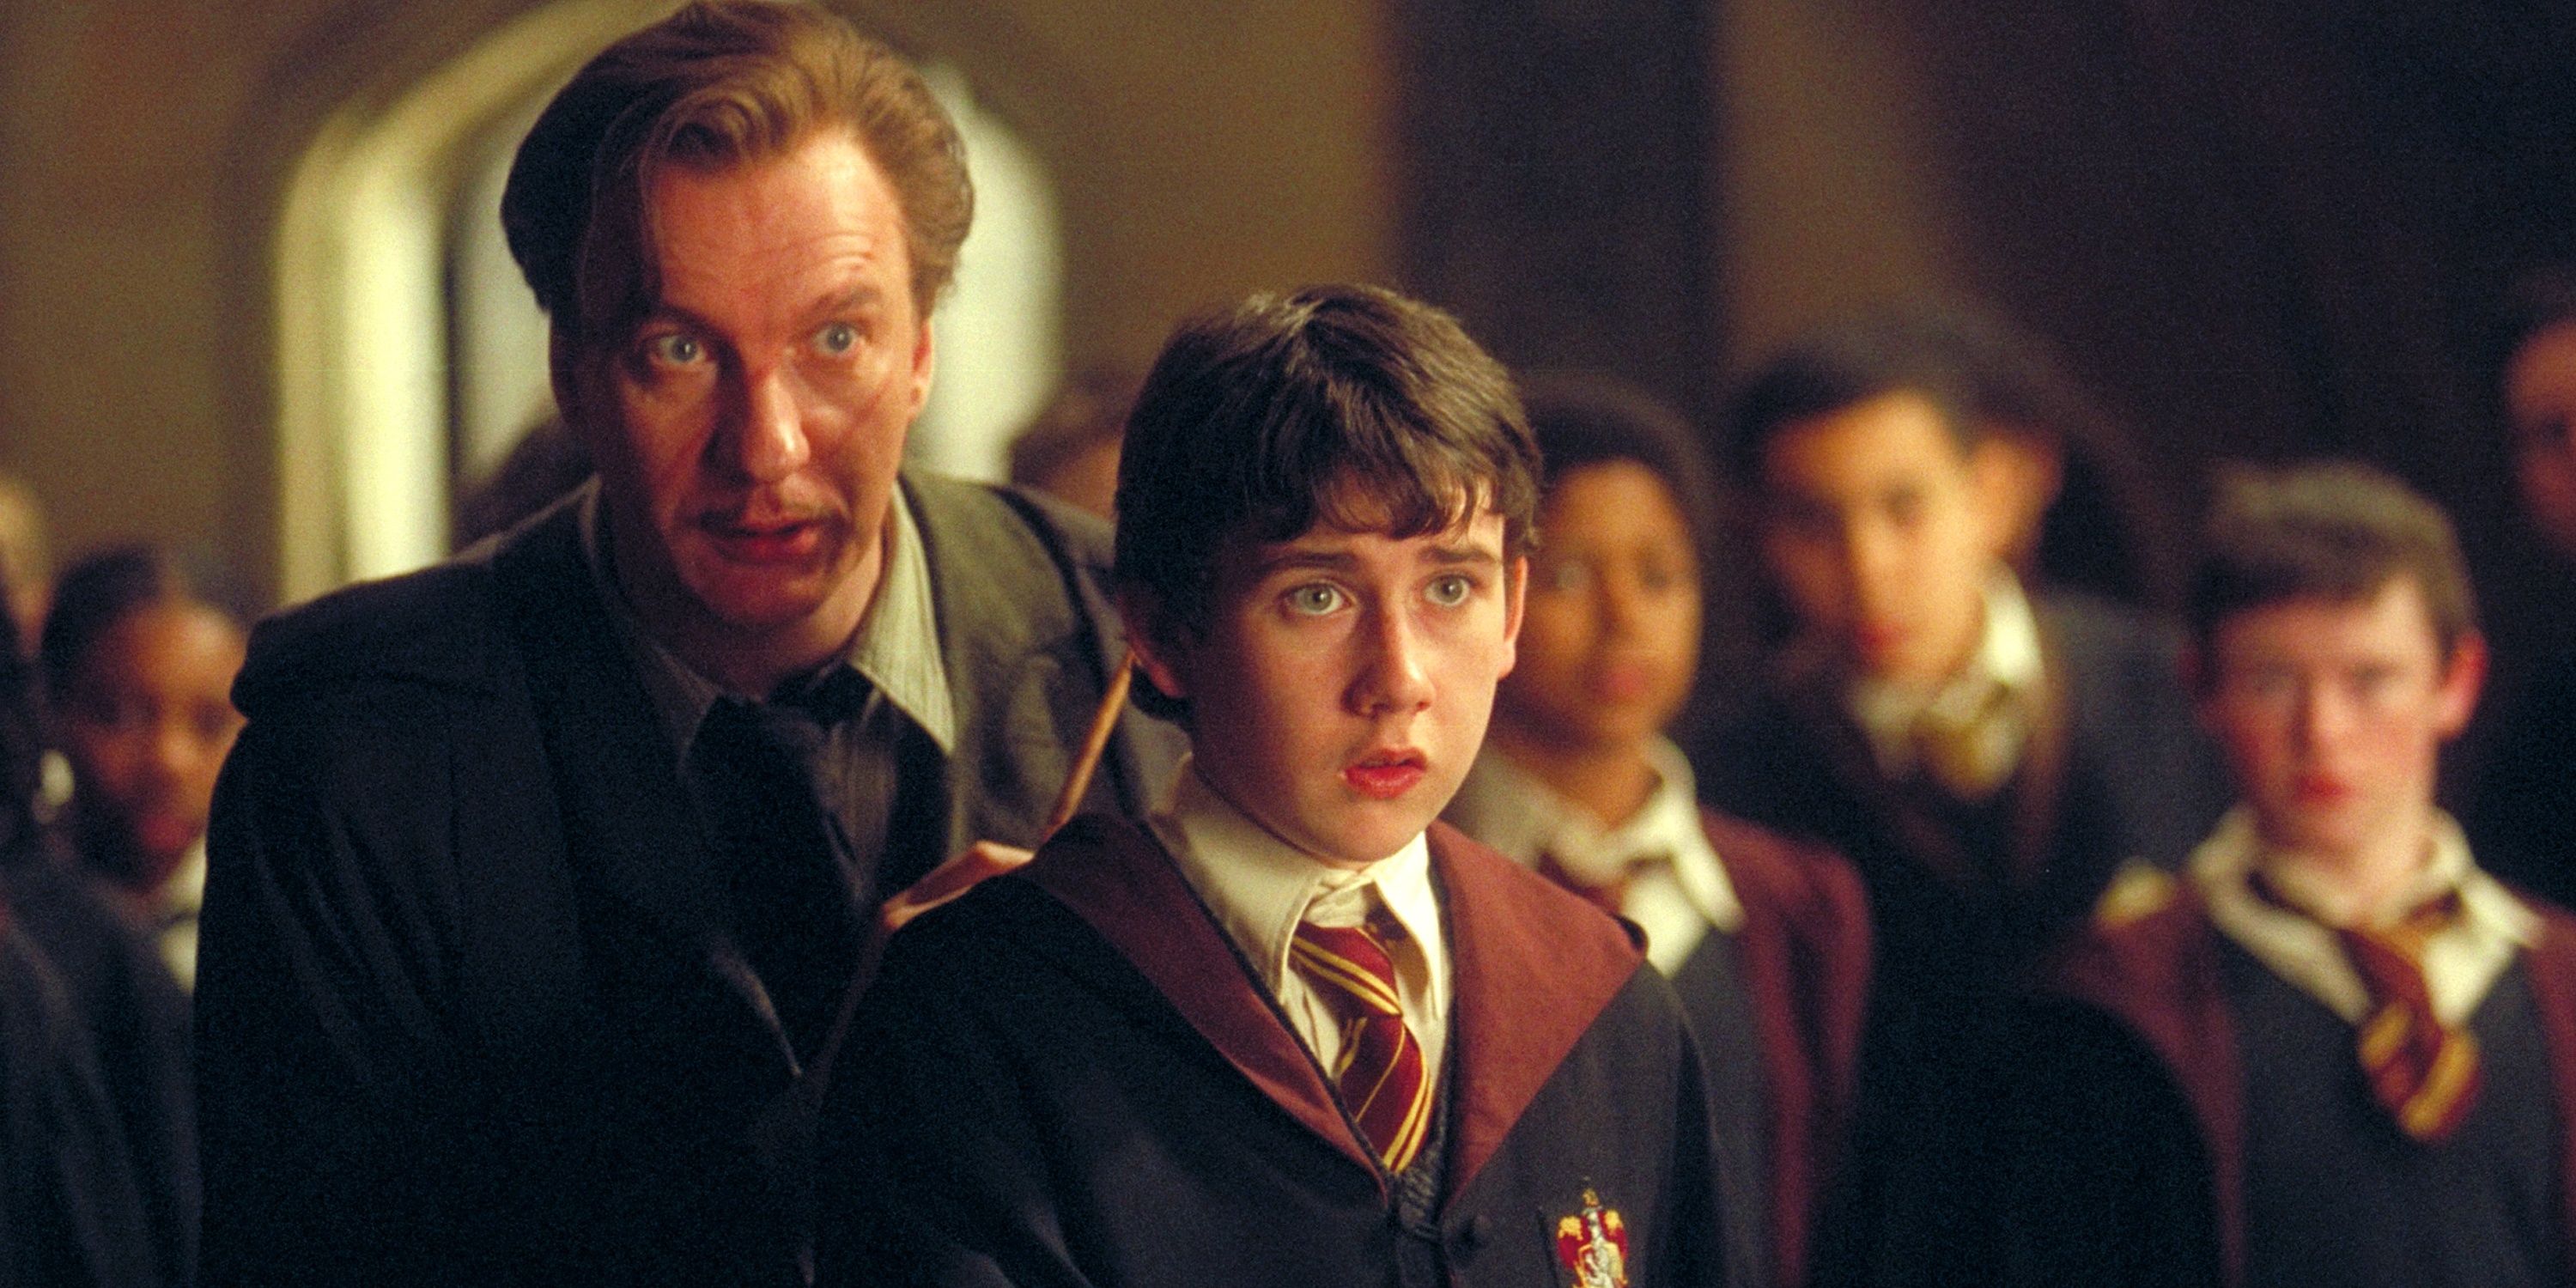 Remus advising Neville.